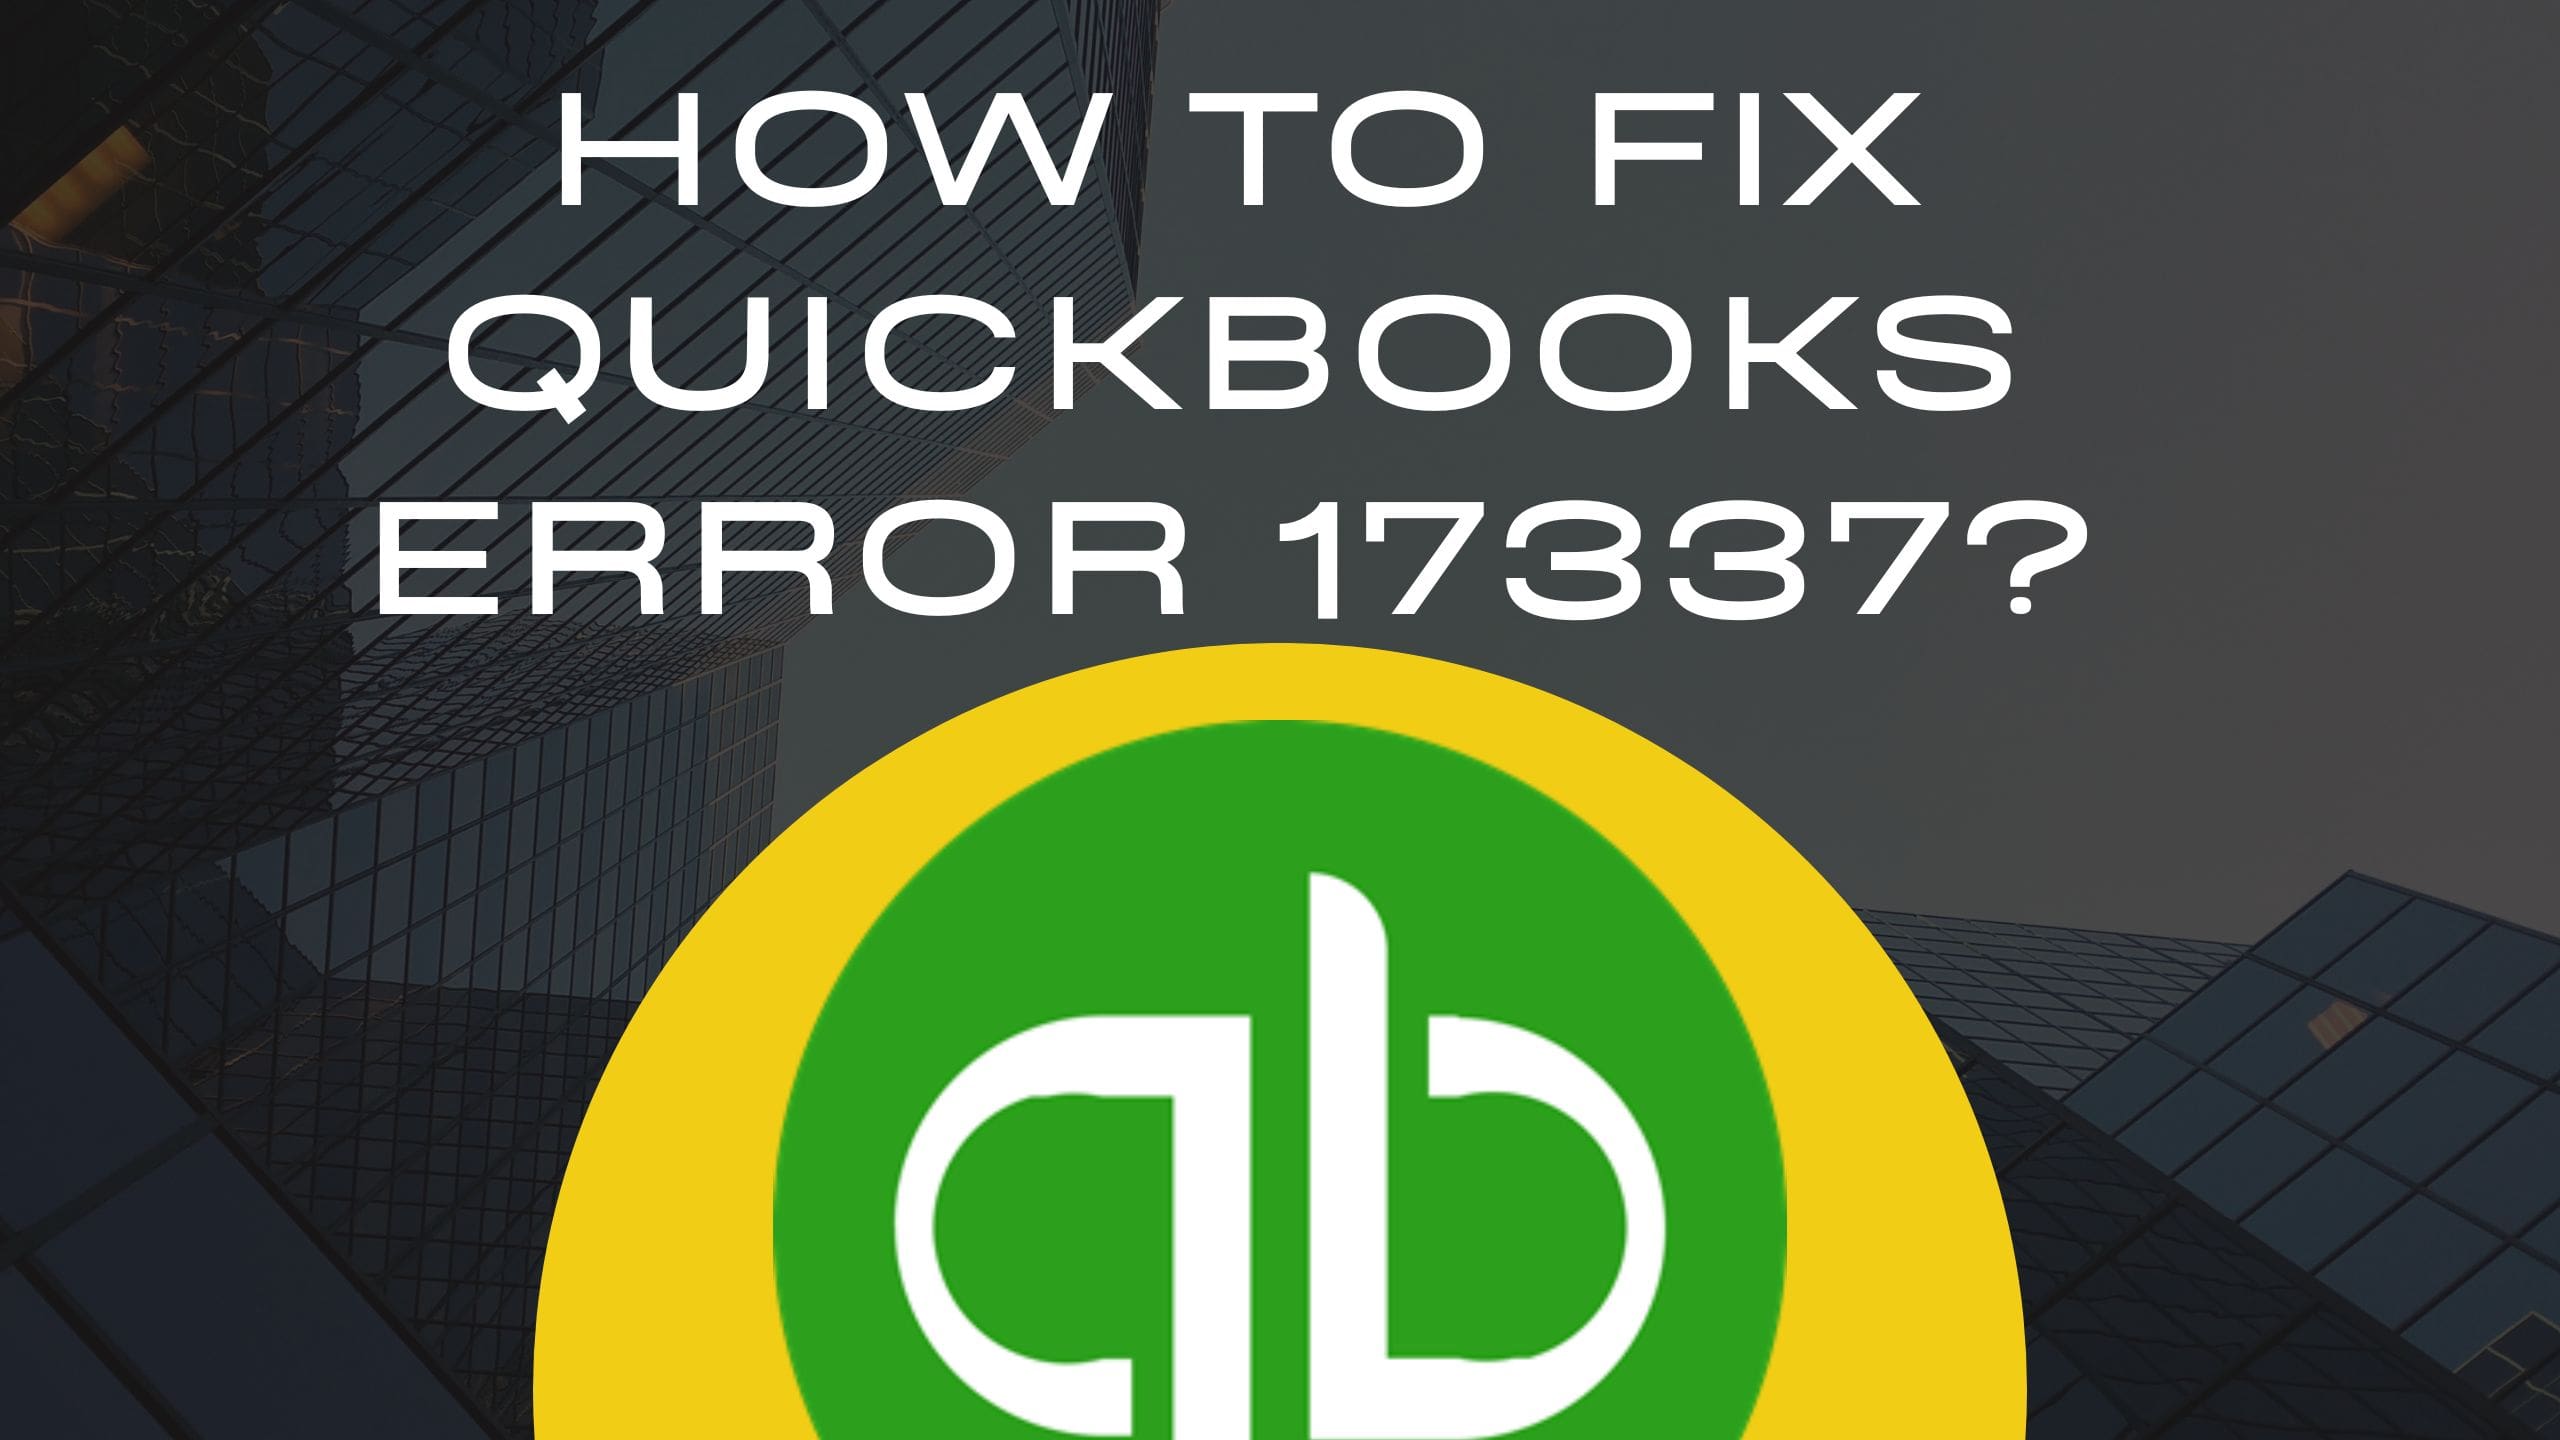 How To Fix QuickBooks Error 17337? A Quick Guide